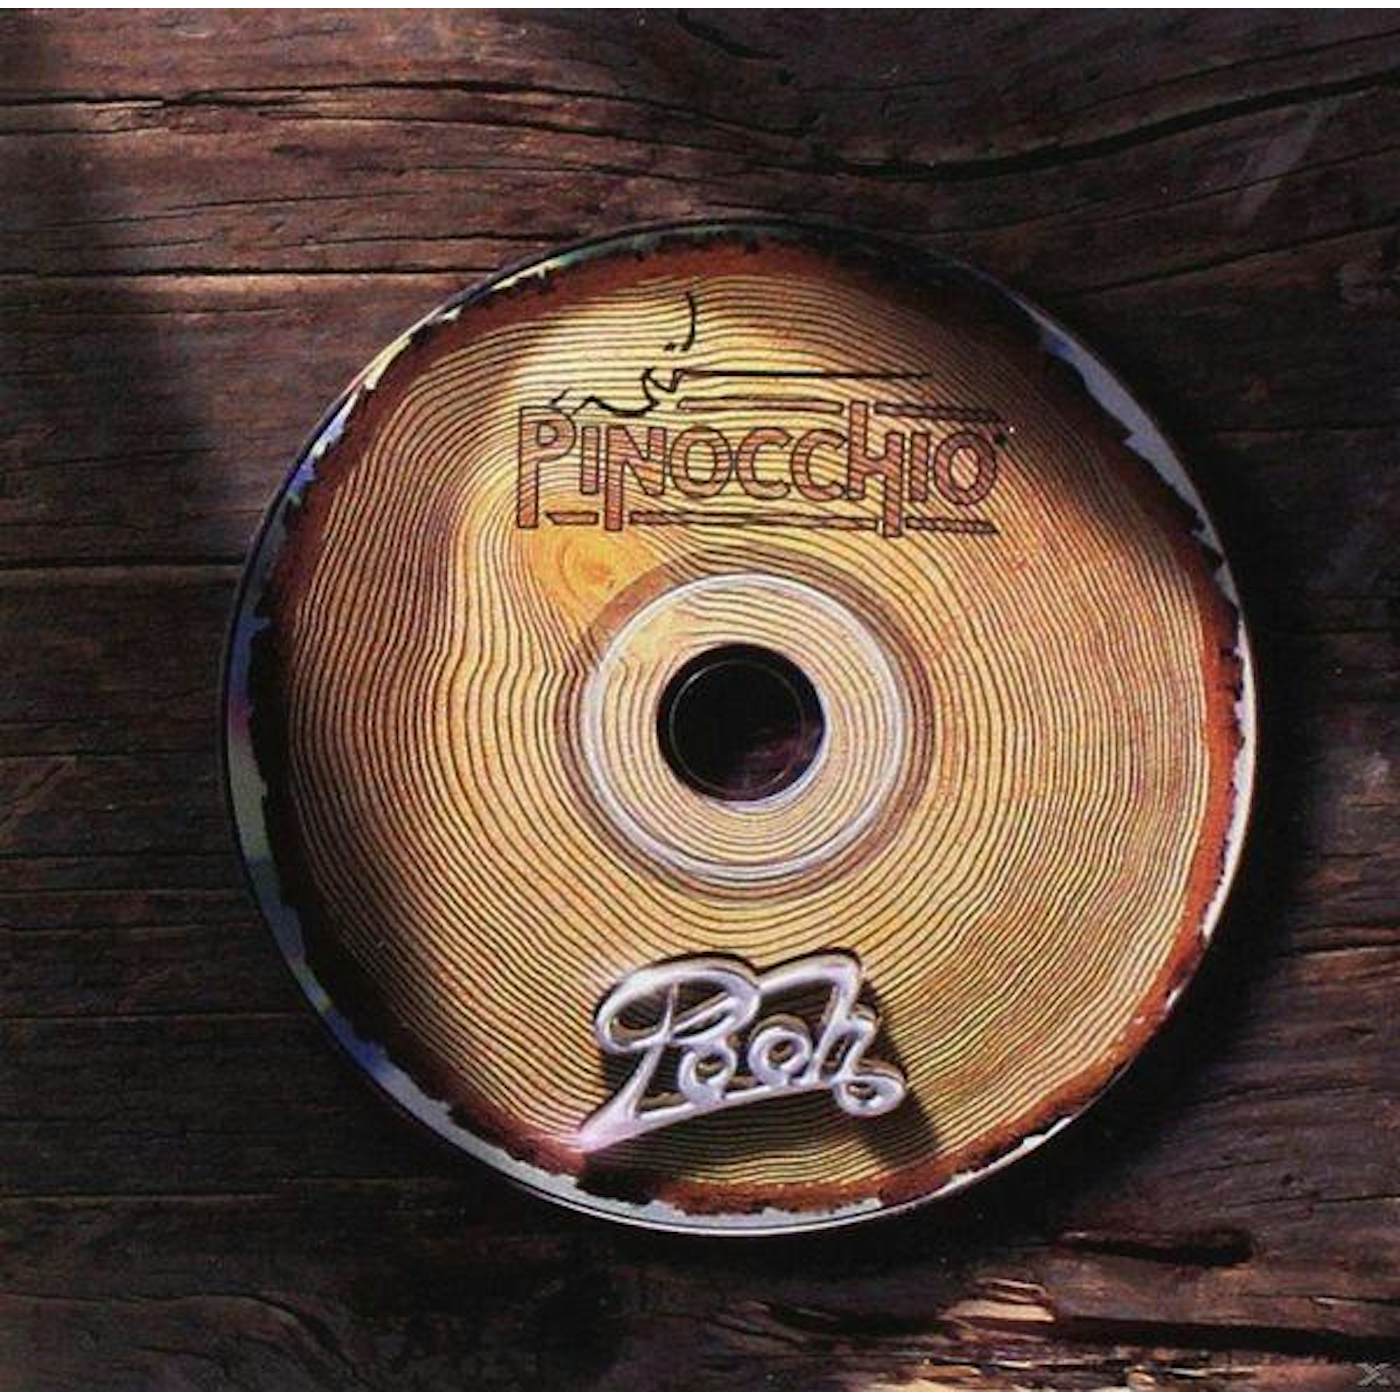 Pooh PINOCCHIO CD